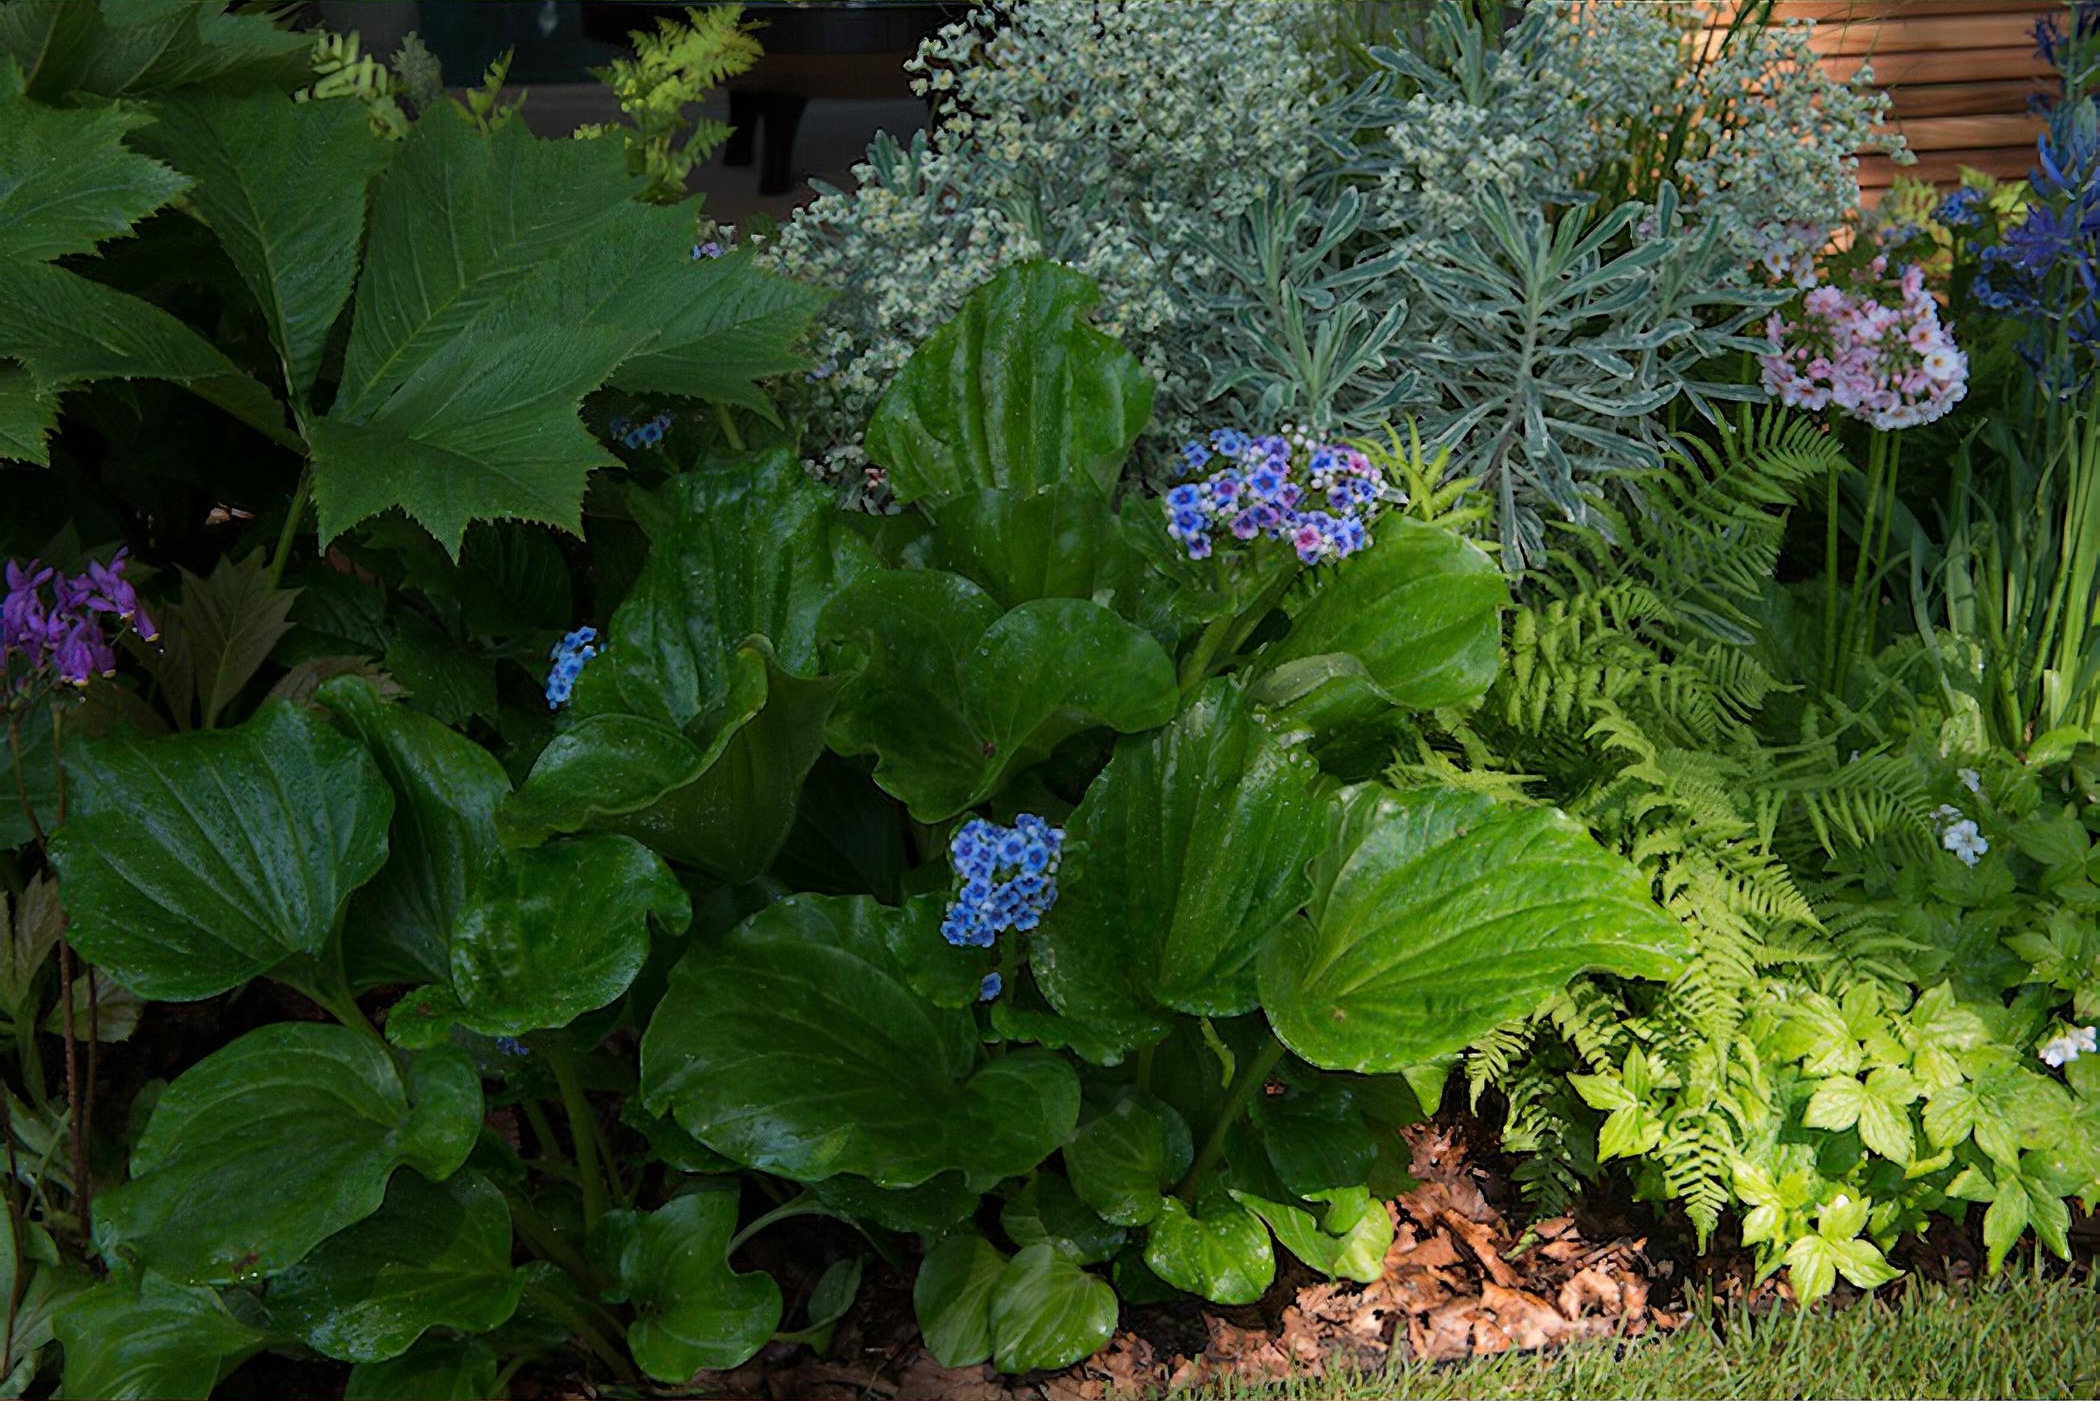 The Morgan Stanley Garden for the NSPCC Chelsea Flower Show 2018 by garden designer Chris Beardshaw